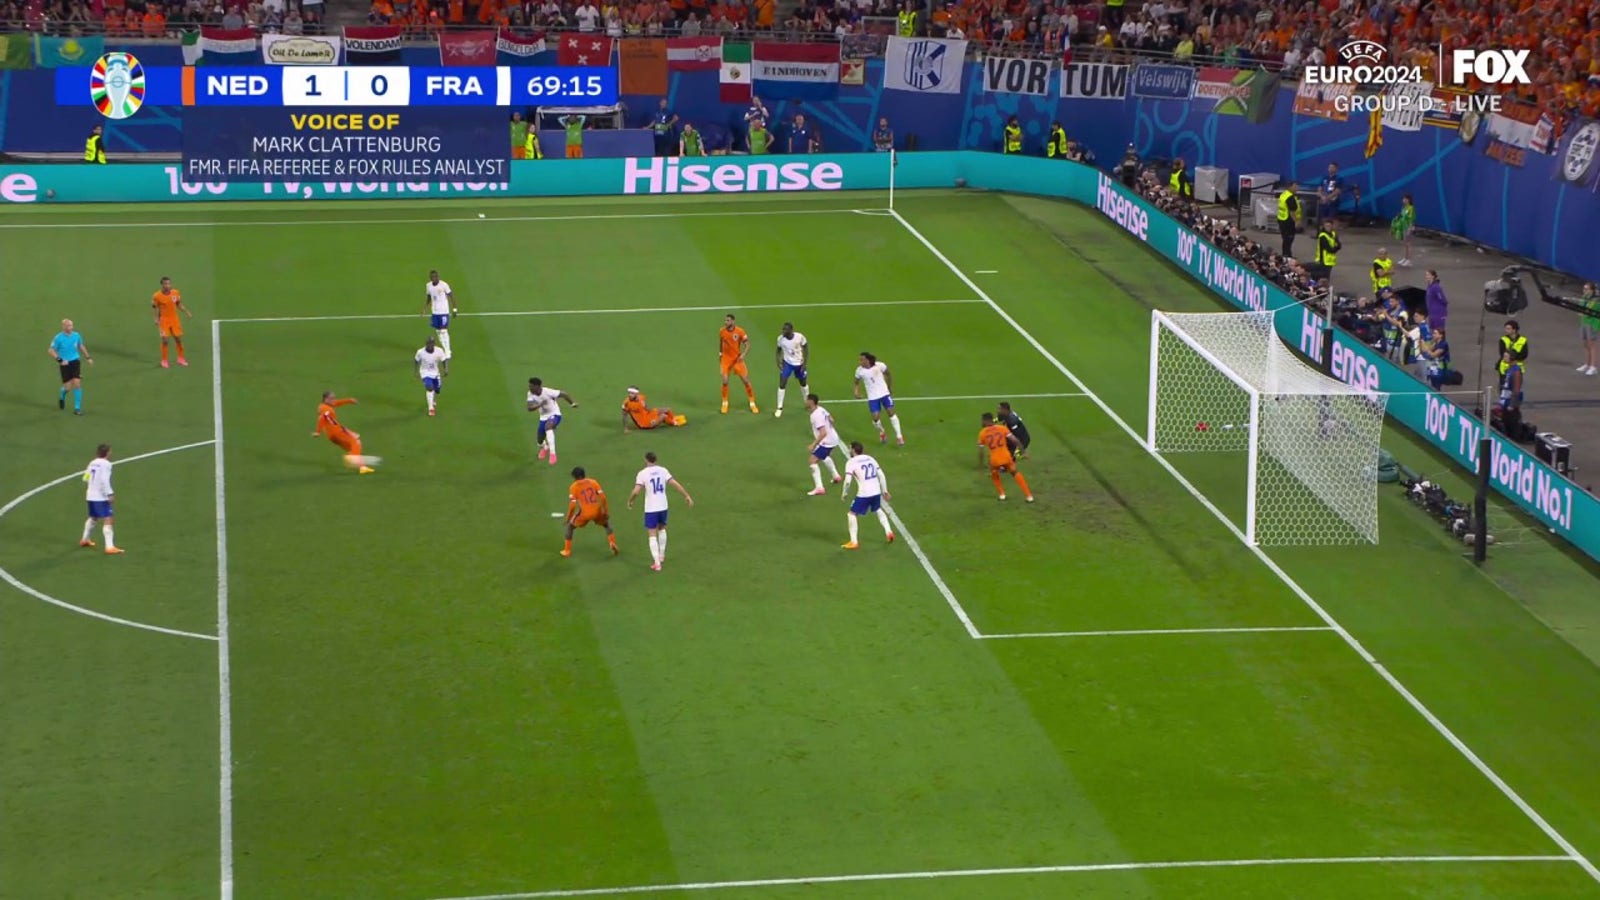 Netherlands' goal is disallowed against France after VAR review | UEFA Euro 2024